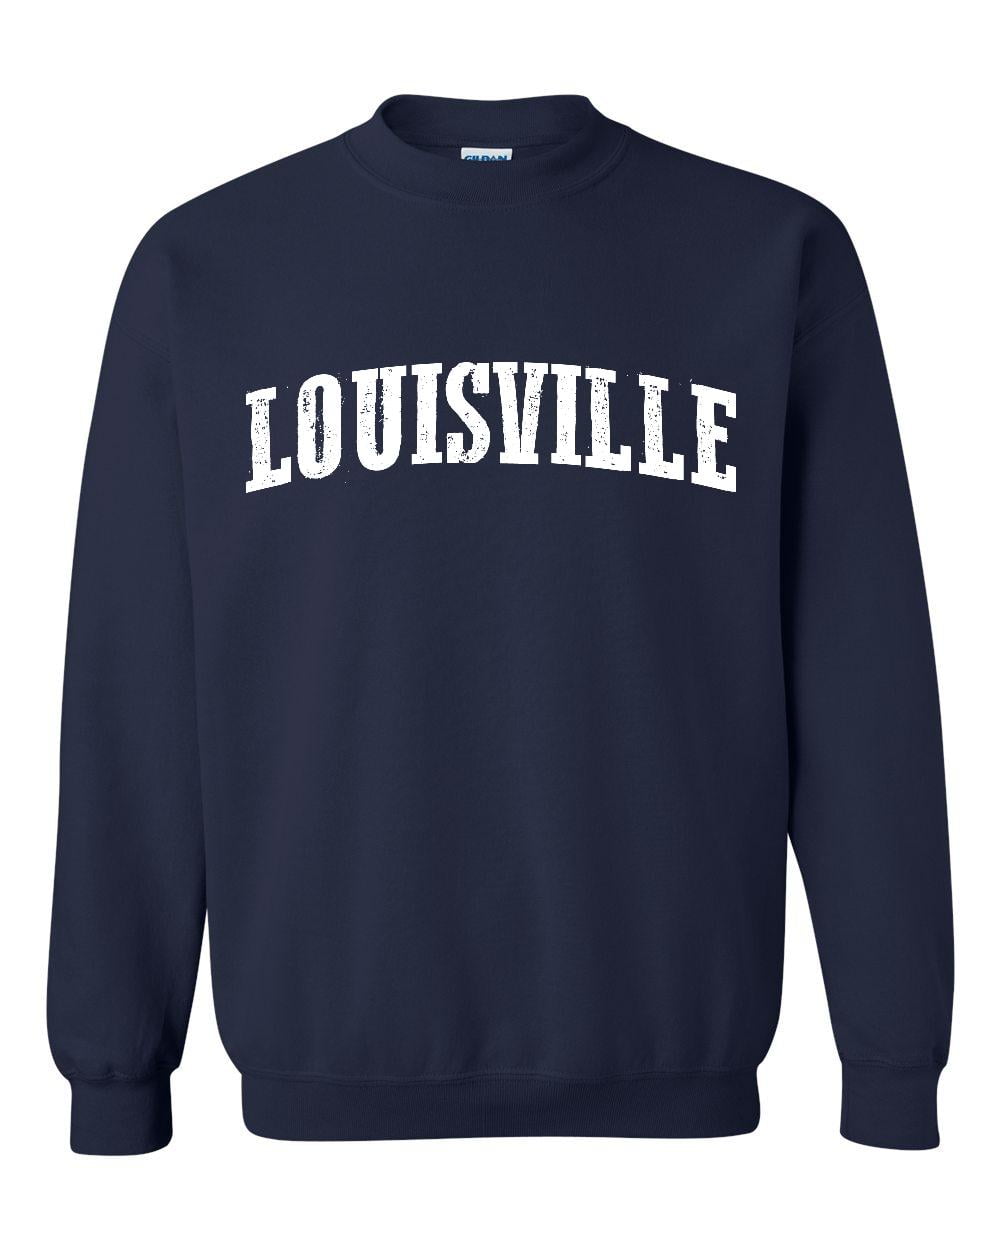 Artix - Mens Sweatshirts and Hoodies - Louisville 